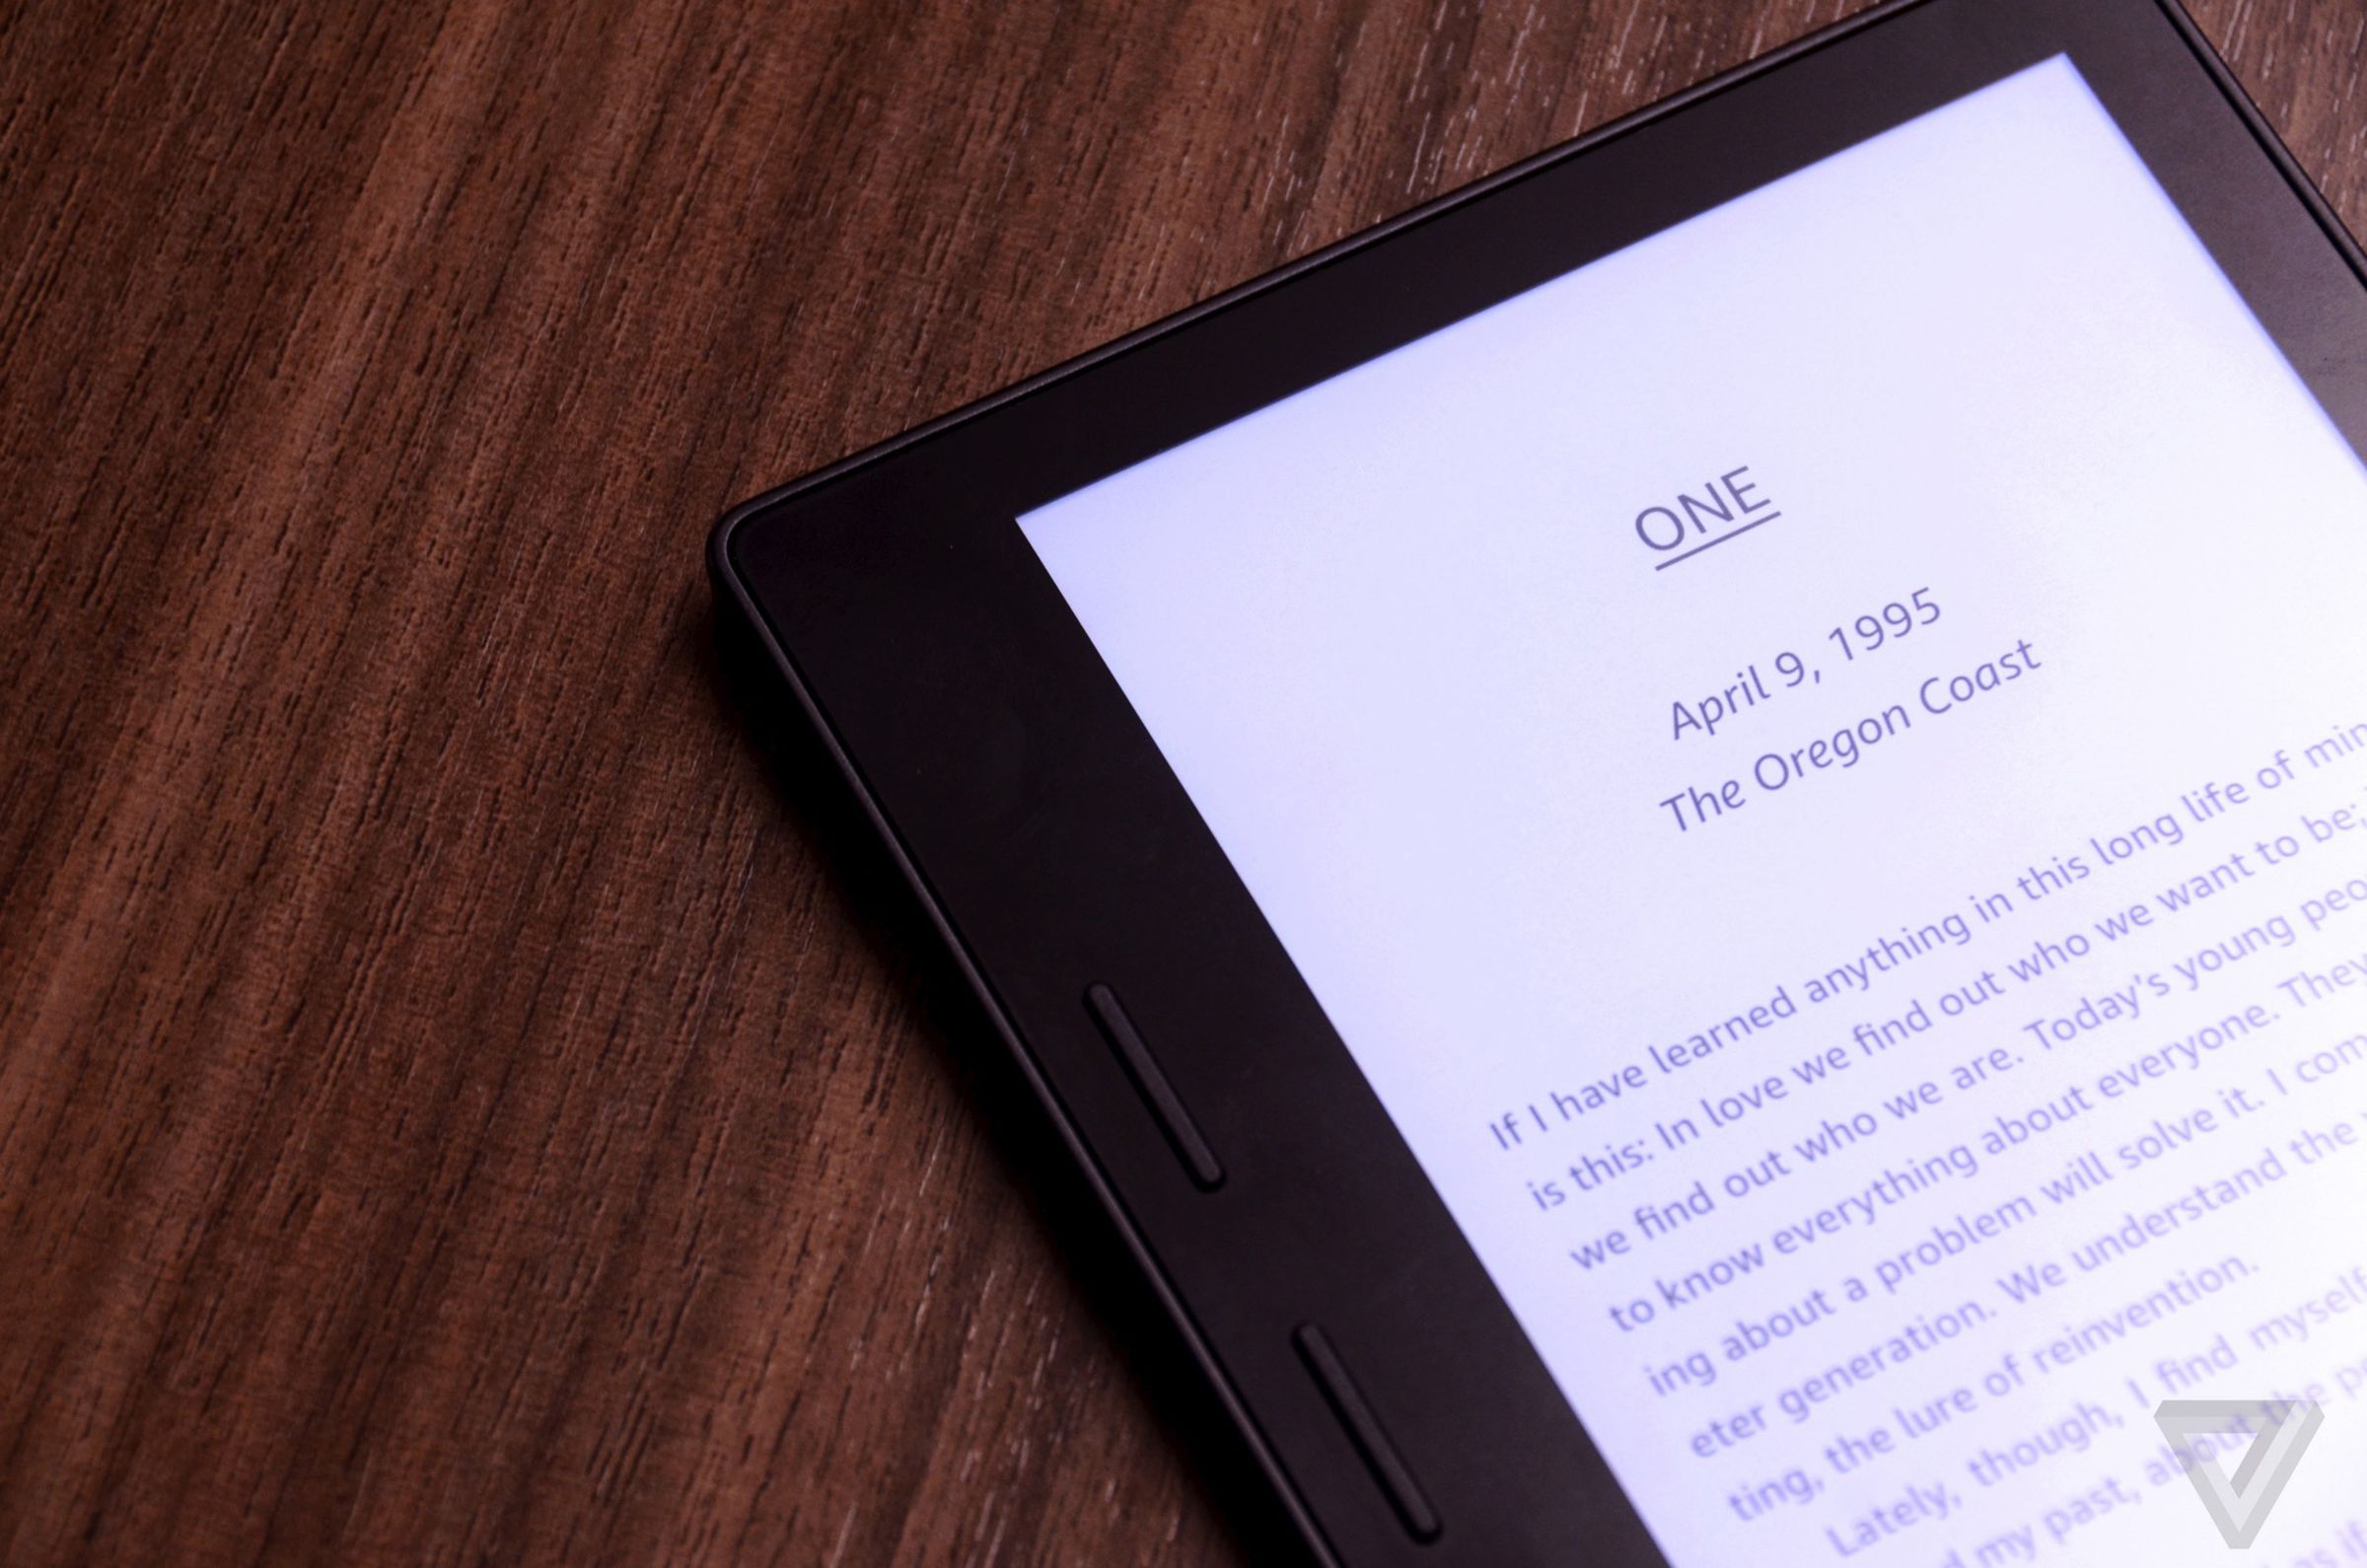 Amazon’s Kindle Oasis e-reader